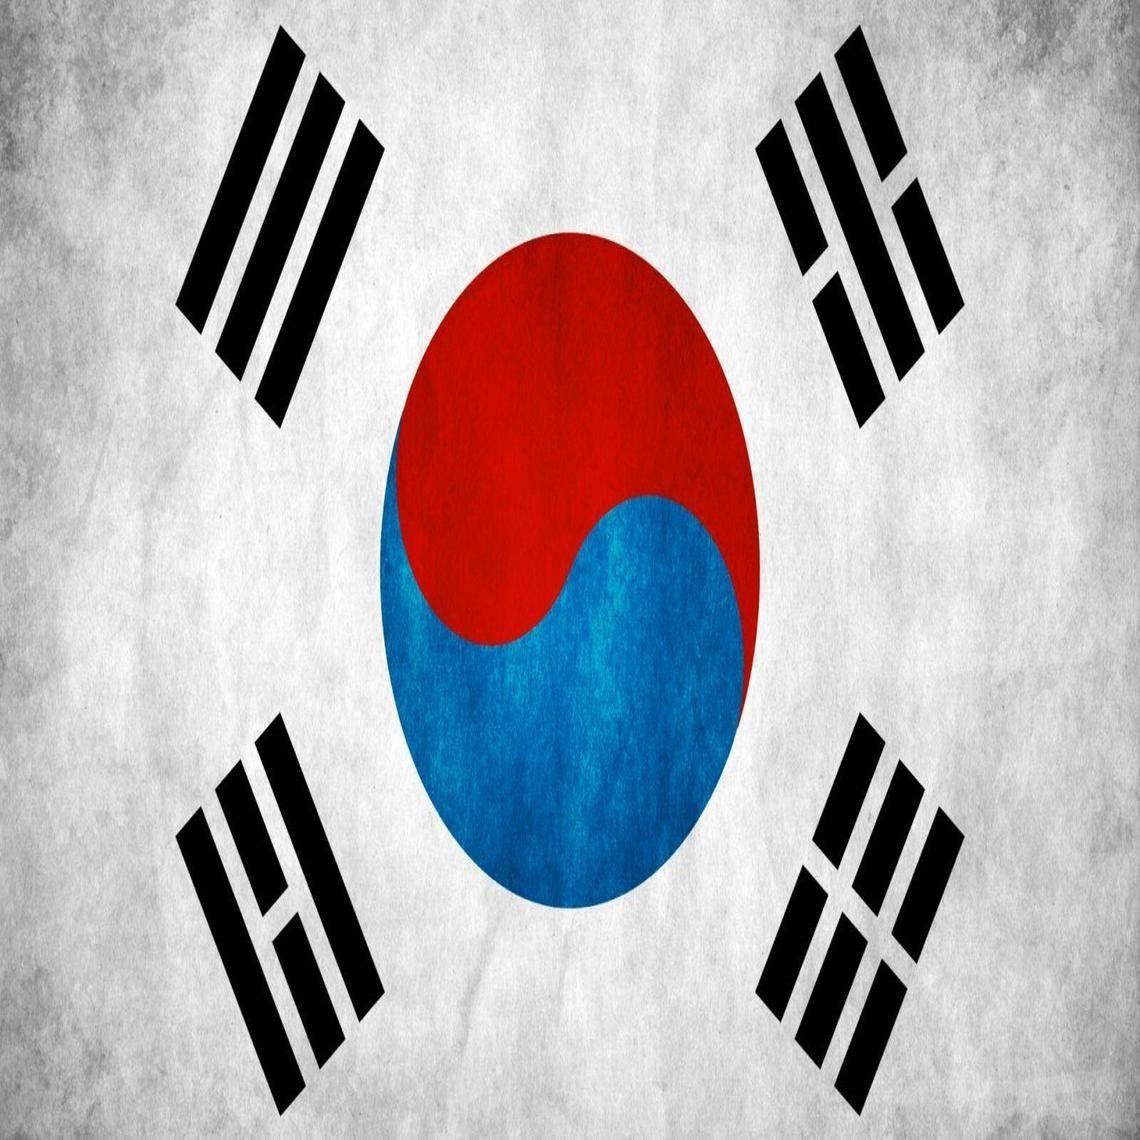 South Korea. Pepsi. South korea and Pepsi